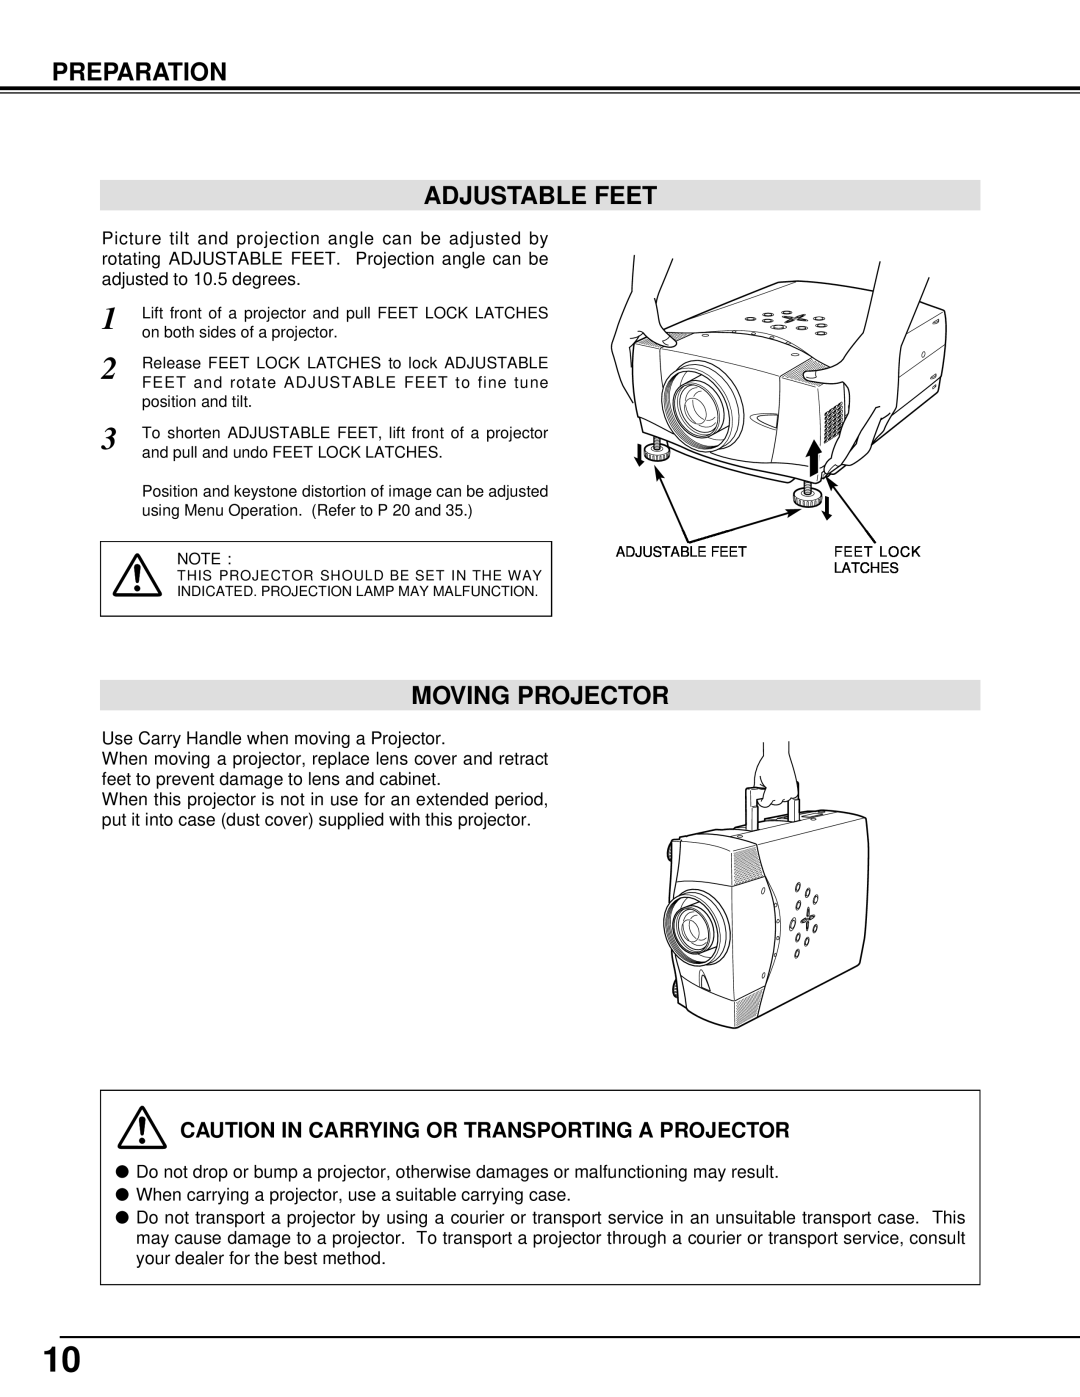 Christie Digital Systems 38-VIV205-01 user manual Preparation Adjustable Feet, Moving Projector 